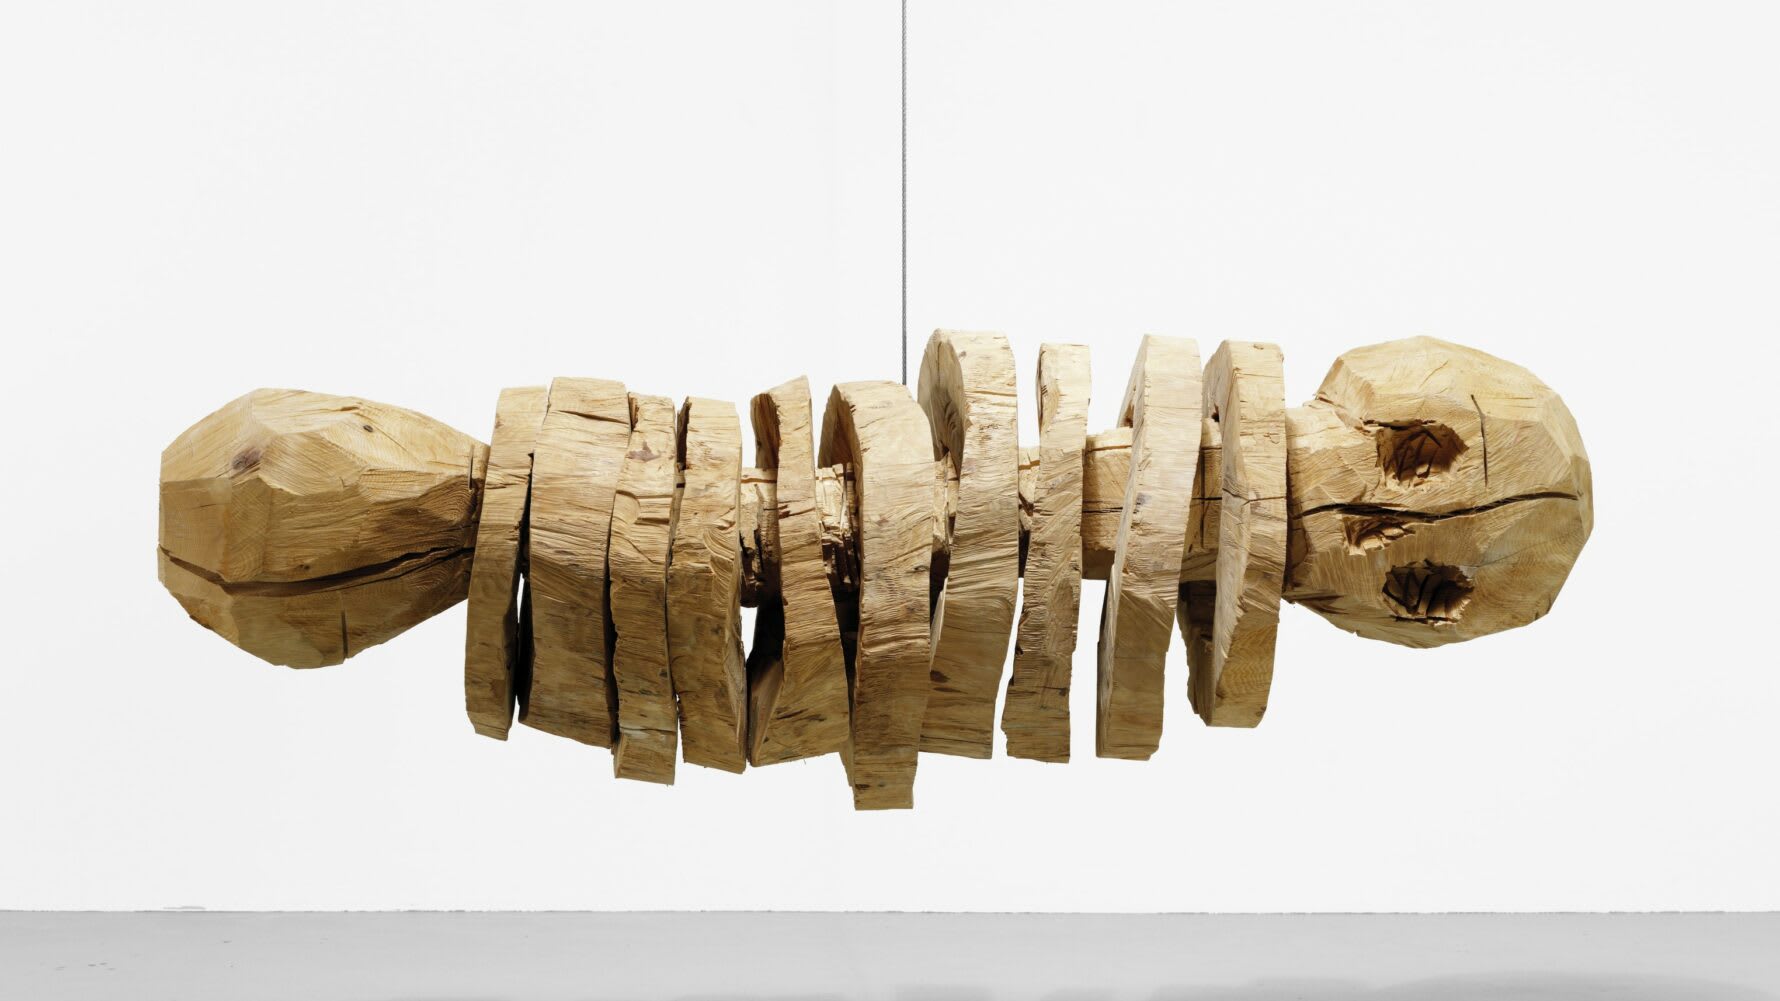 Georg Baselitz: Sculptures 2011-2015 Solo Baselitz exhibit at Serpentine in London